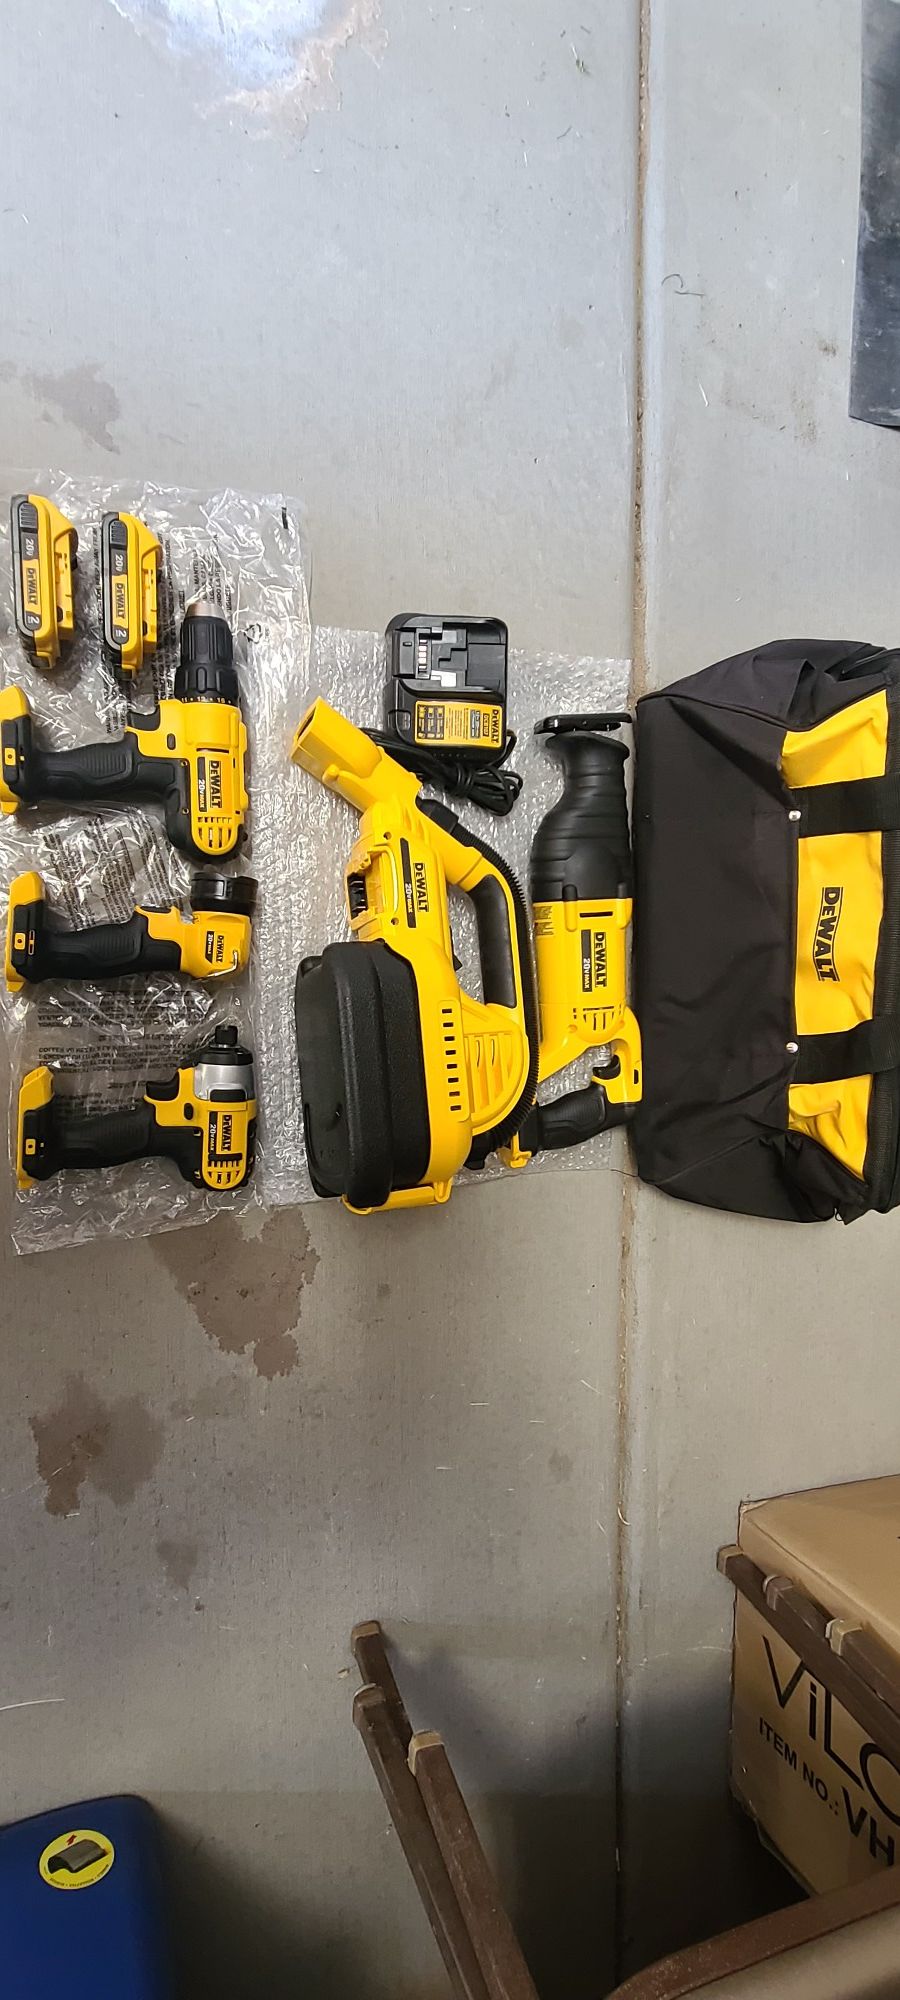 Dewalt 20v power tools